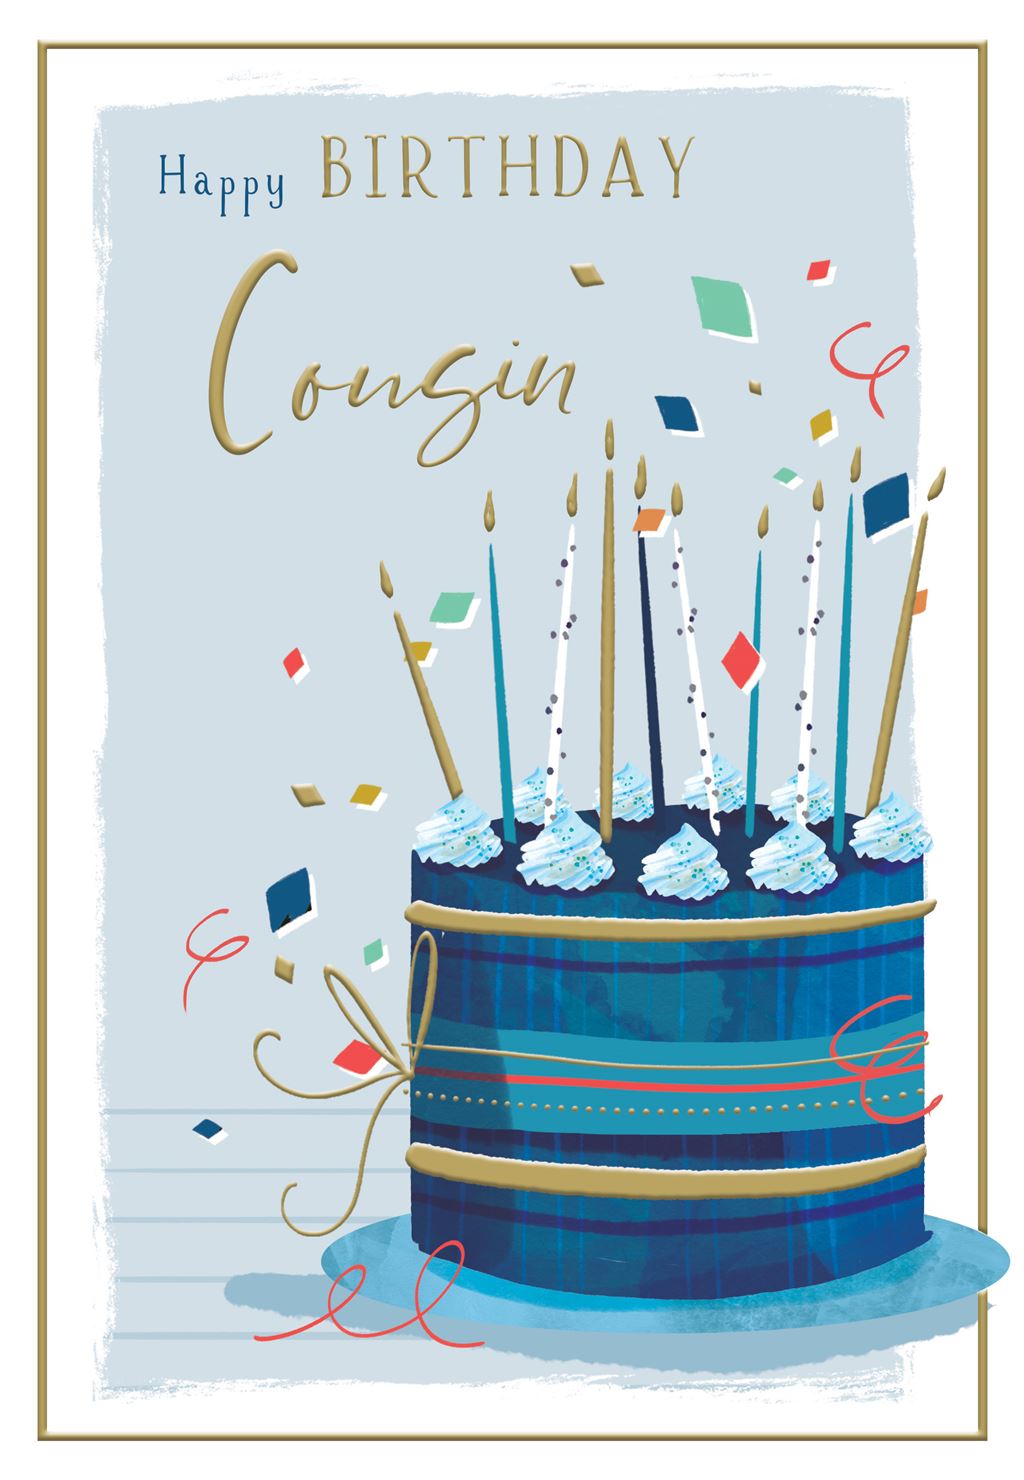 Cousin birthday card - birthday cake